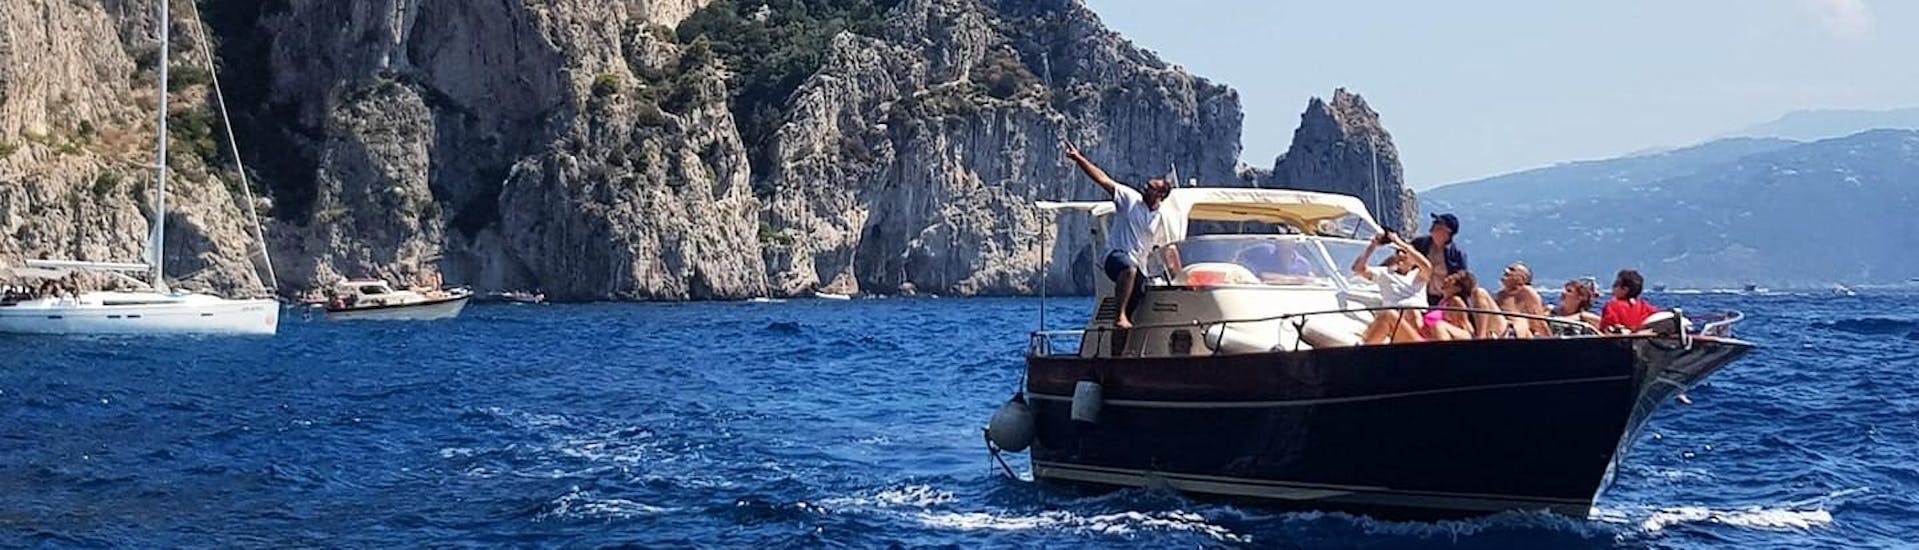 Gita in barca da Sorrento a Positano e Amalfi.